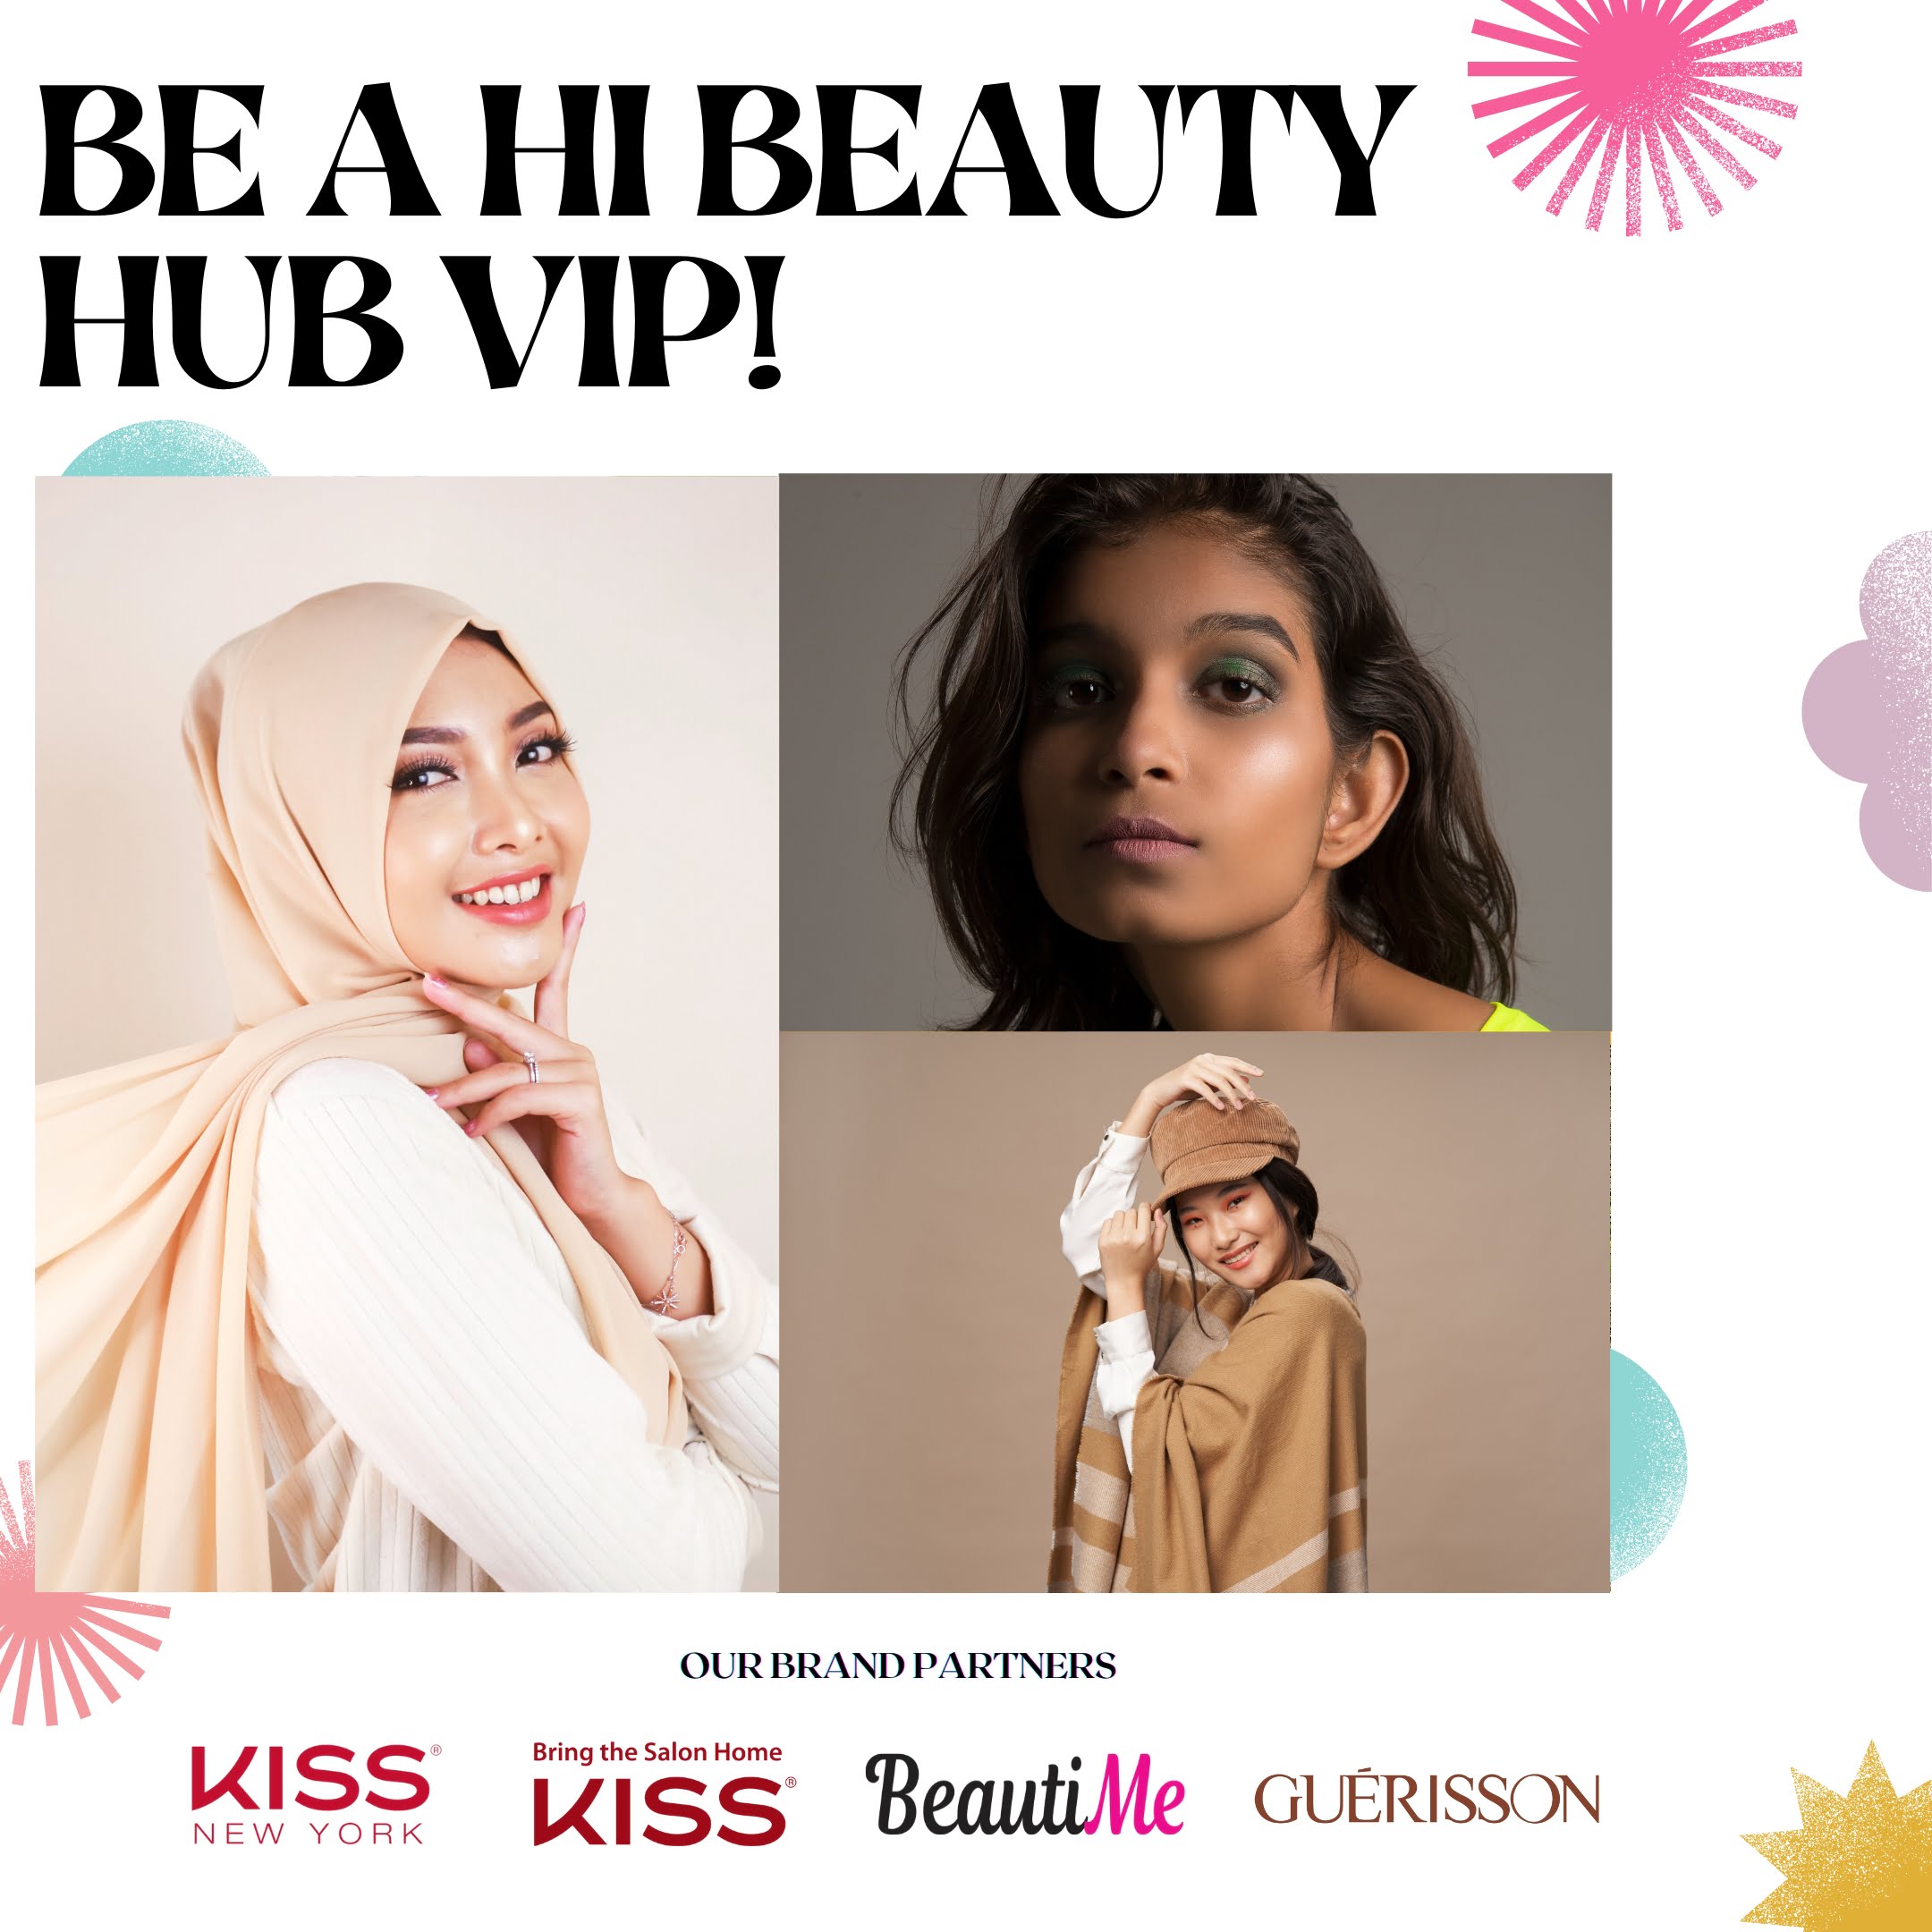 Be A Hi Beauty Hub VIP and Unlock Exclusive Beauty Experiences!